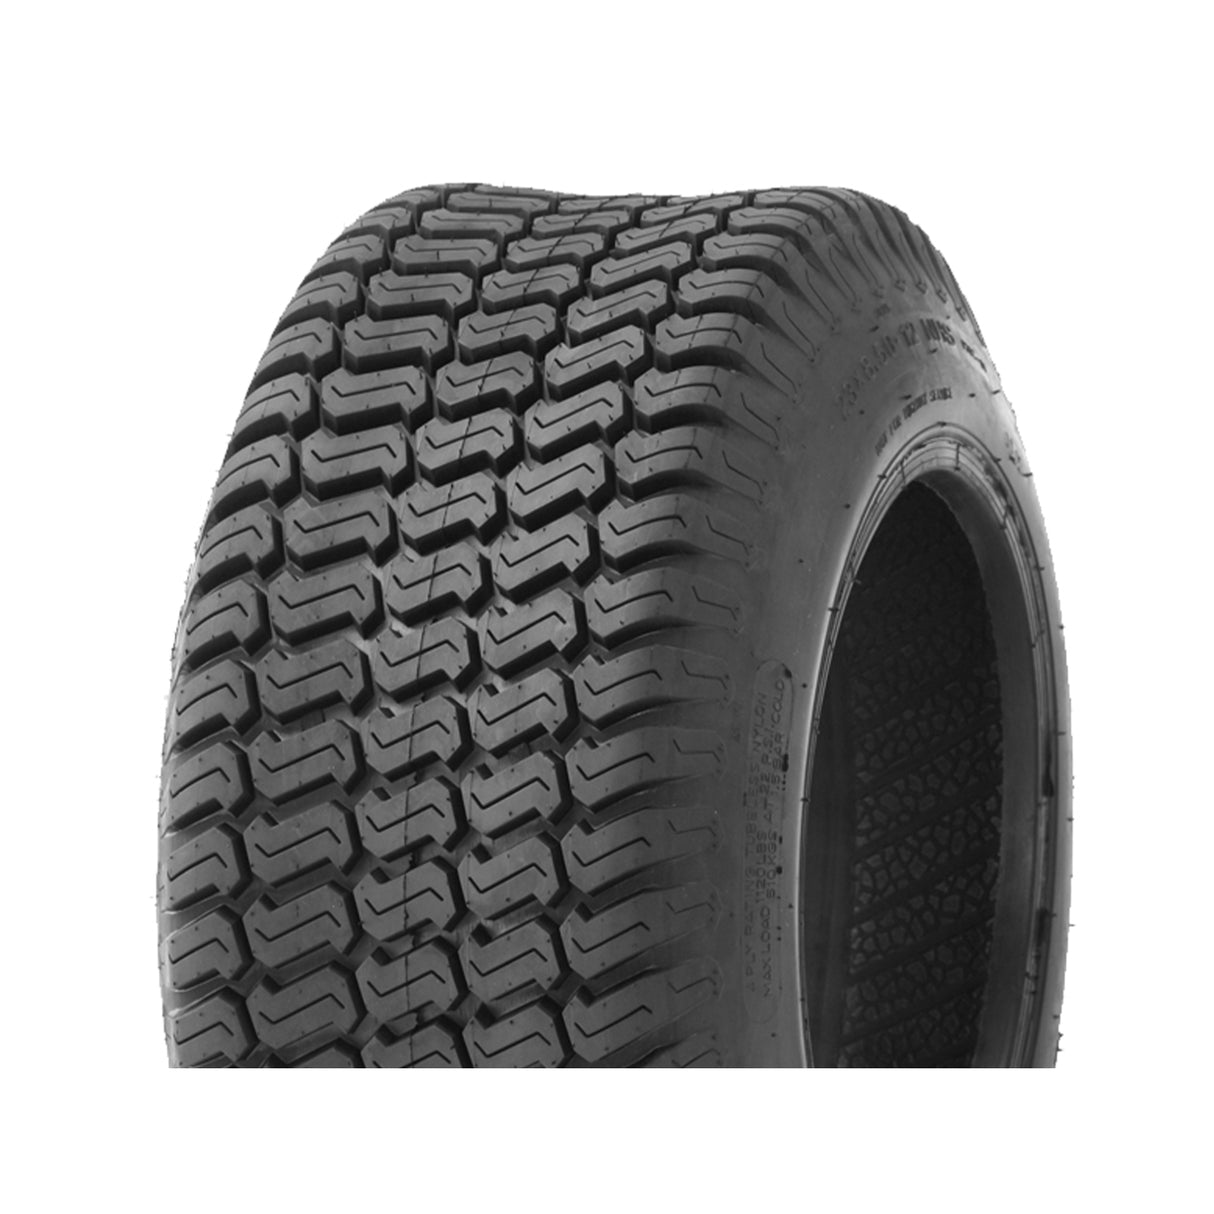 24x9.50-12 P332 (6 PLY) Wanda Turf/Mower Tyre - GEO Tyres Online